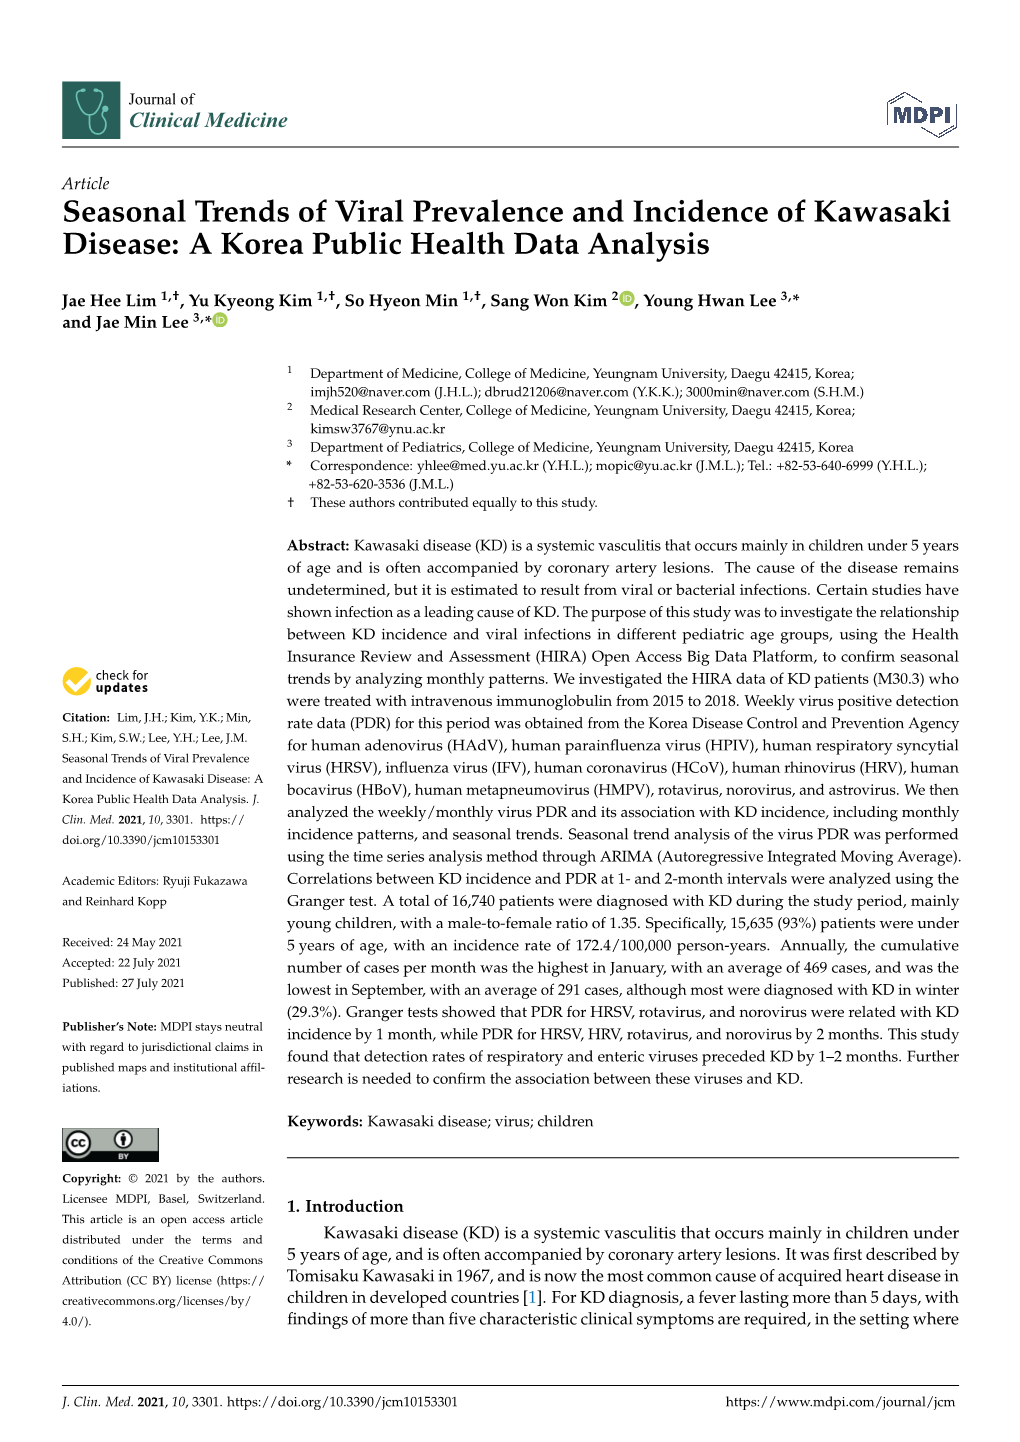 Seasonal Trends of Viral Prevalence and Incidence of Kawasaki Disease: a Korea Public Health Data Analysis